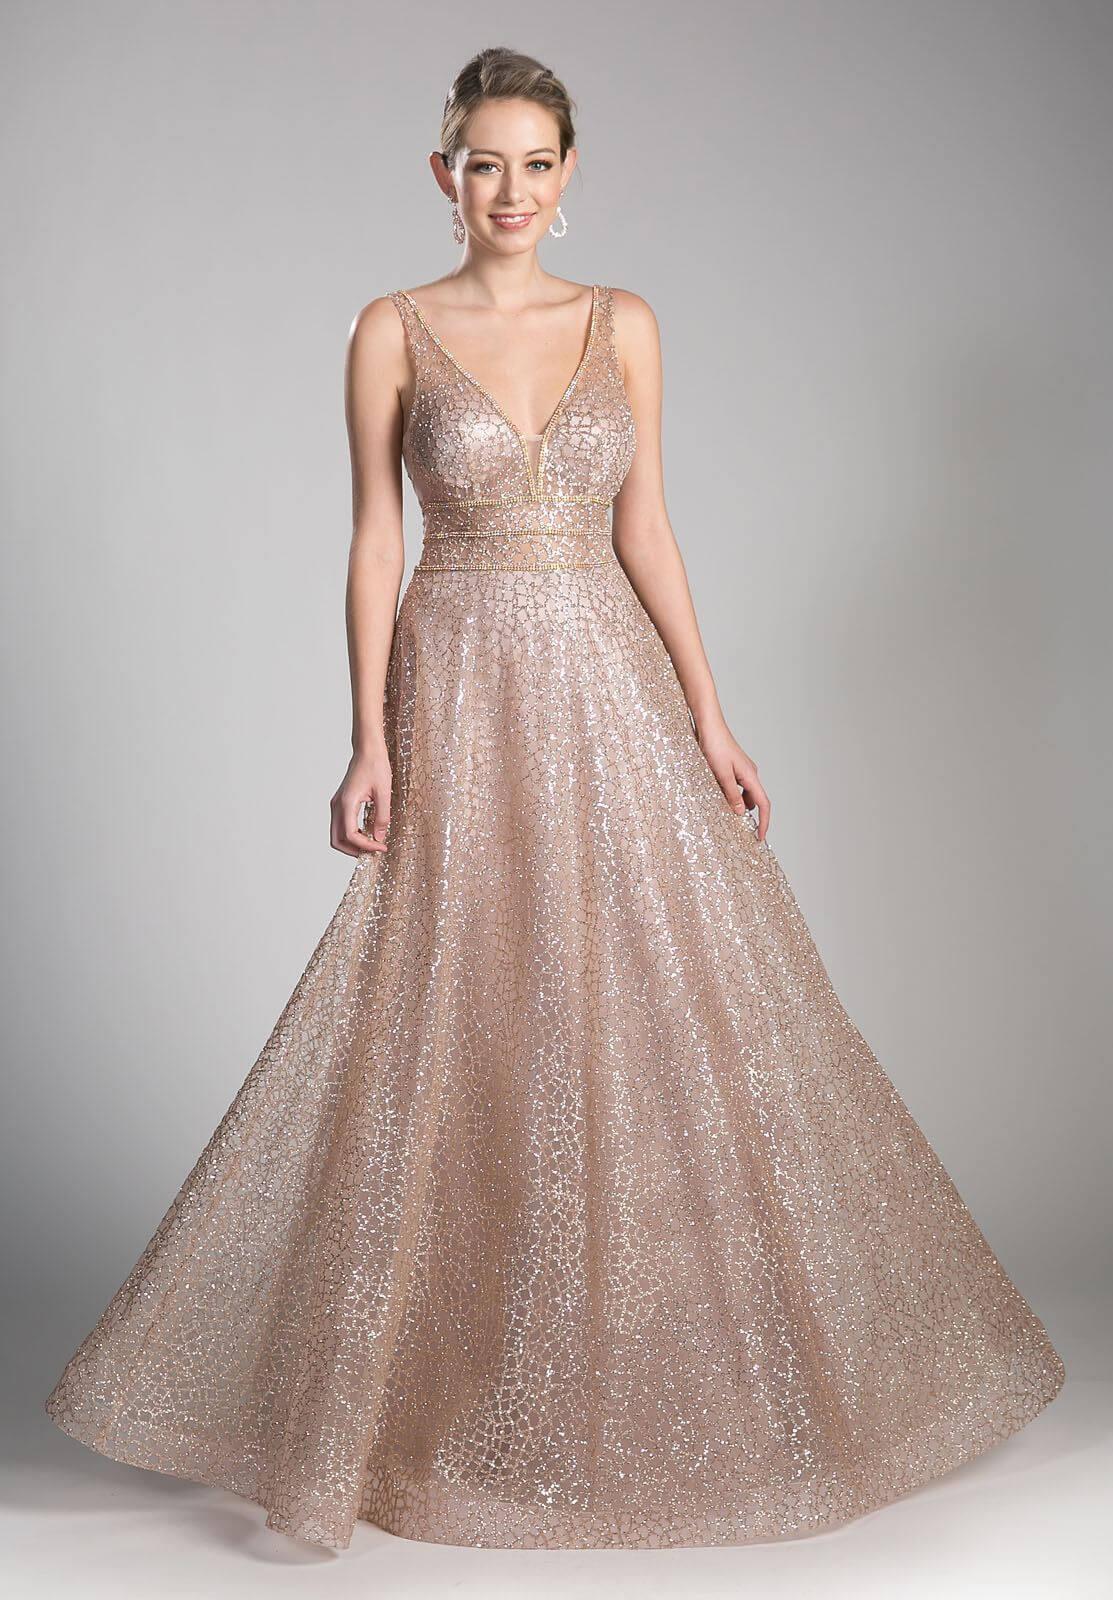 Long A Line Prom Metallic Dress Evening Gown - The Dress Outlet Cinderella Divine